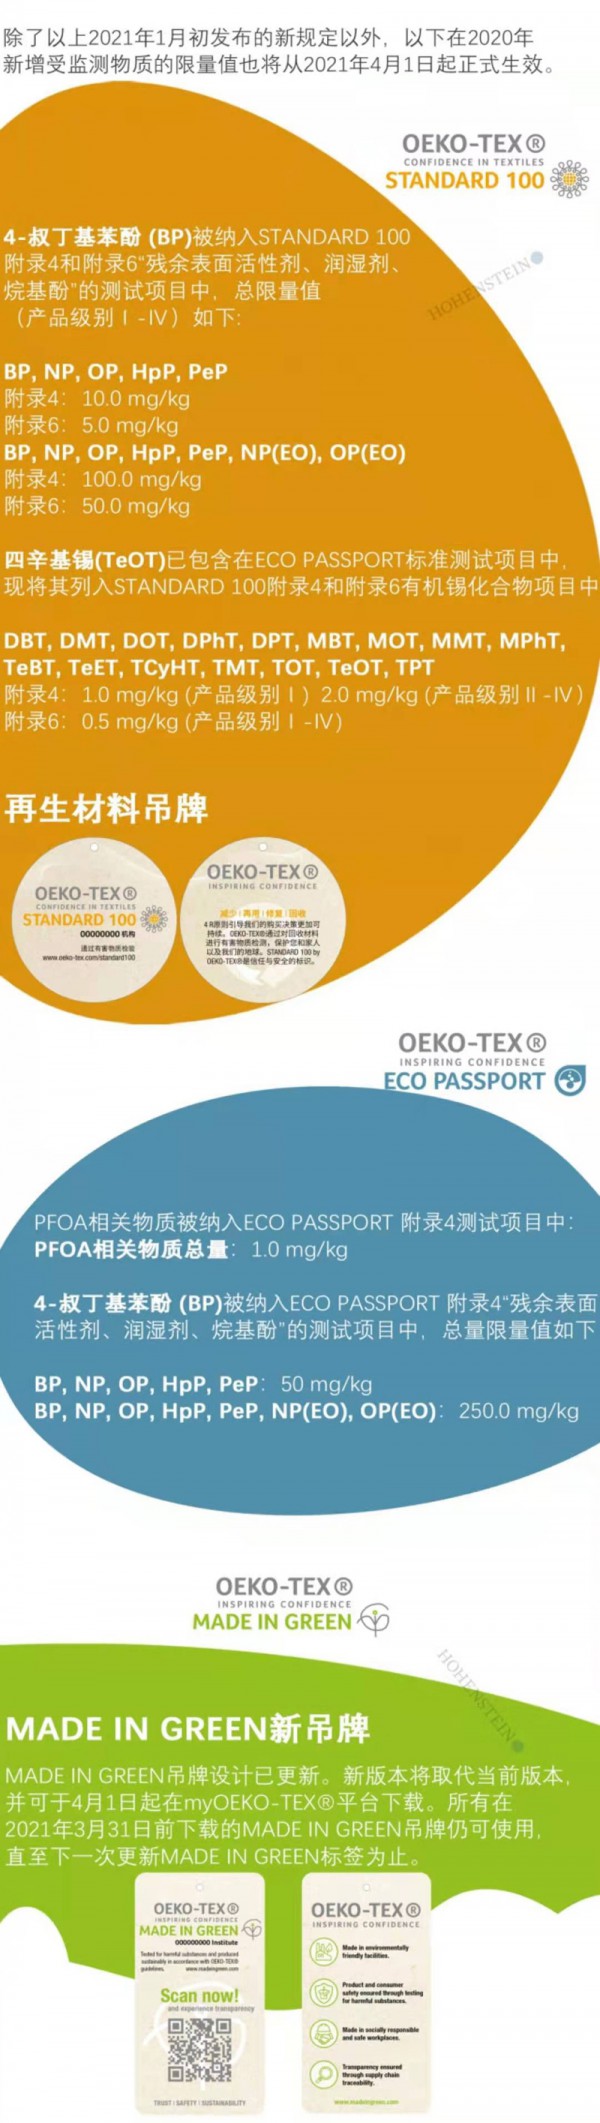 OEKO-TEX®2021年新规4月1日起正式生效